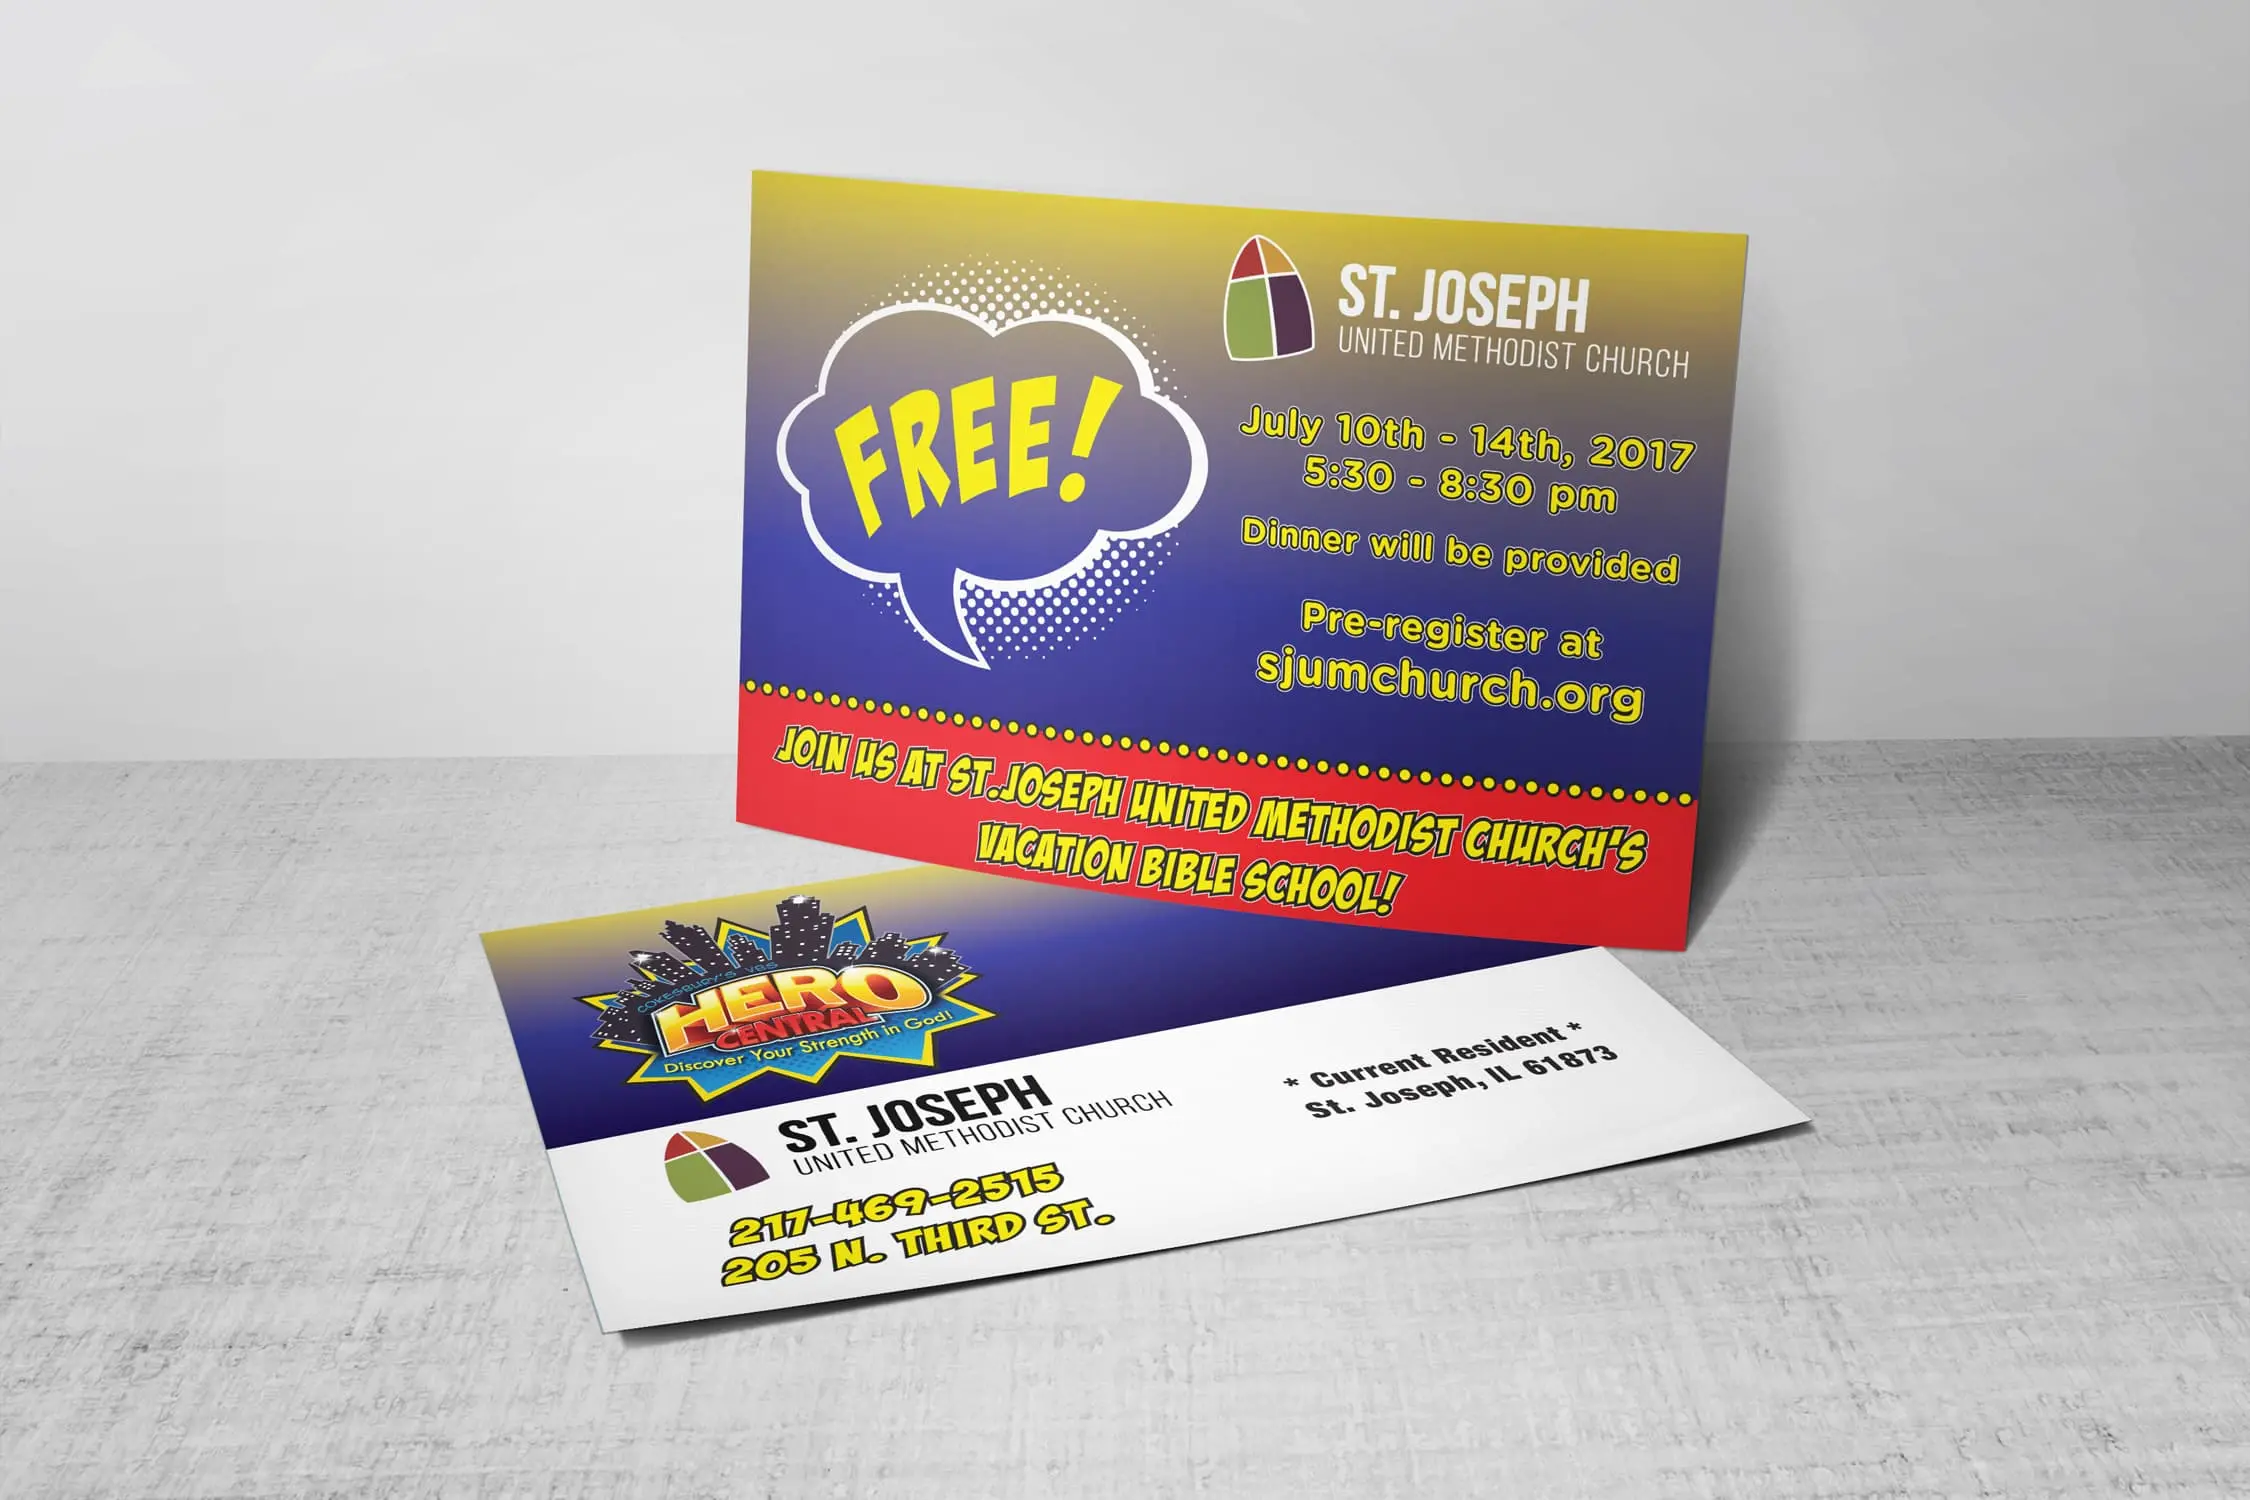 st. joseph untied methodist church vacation bible school 2017 postcards